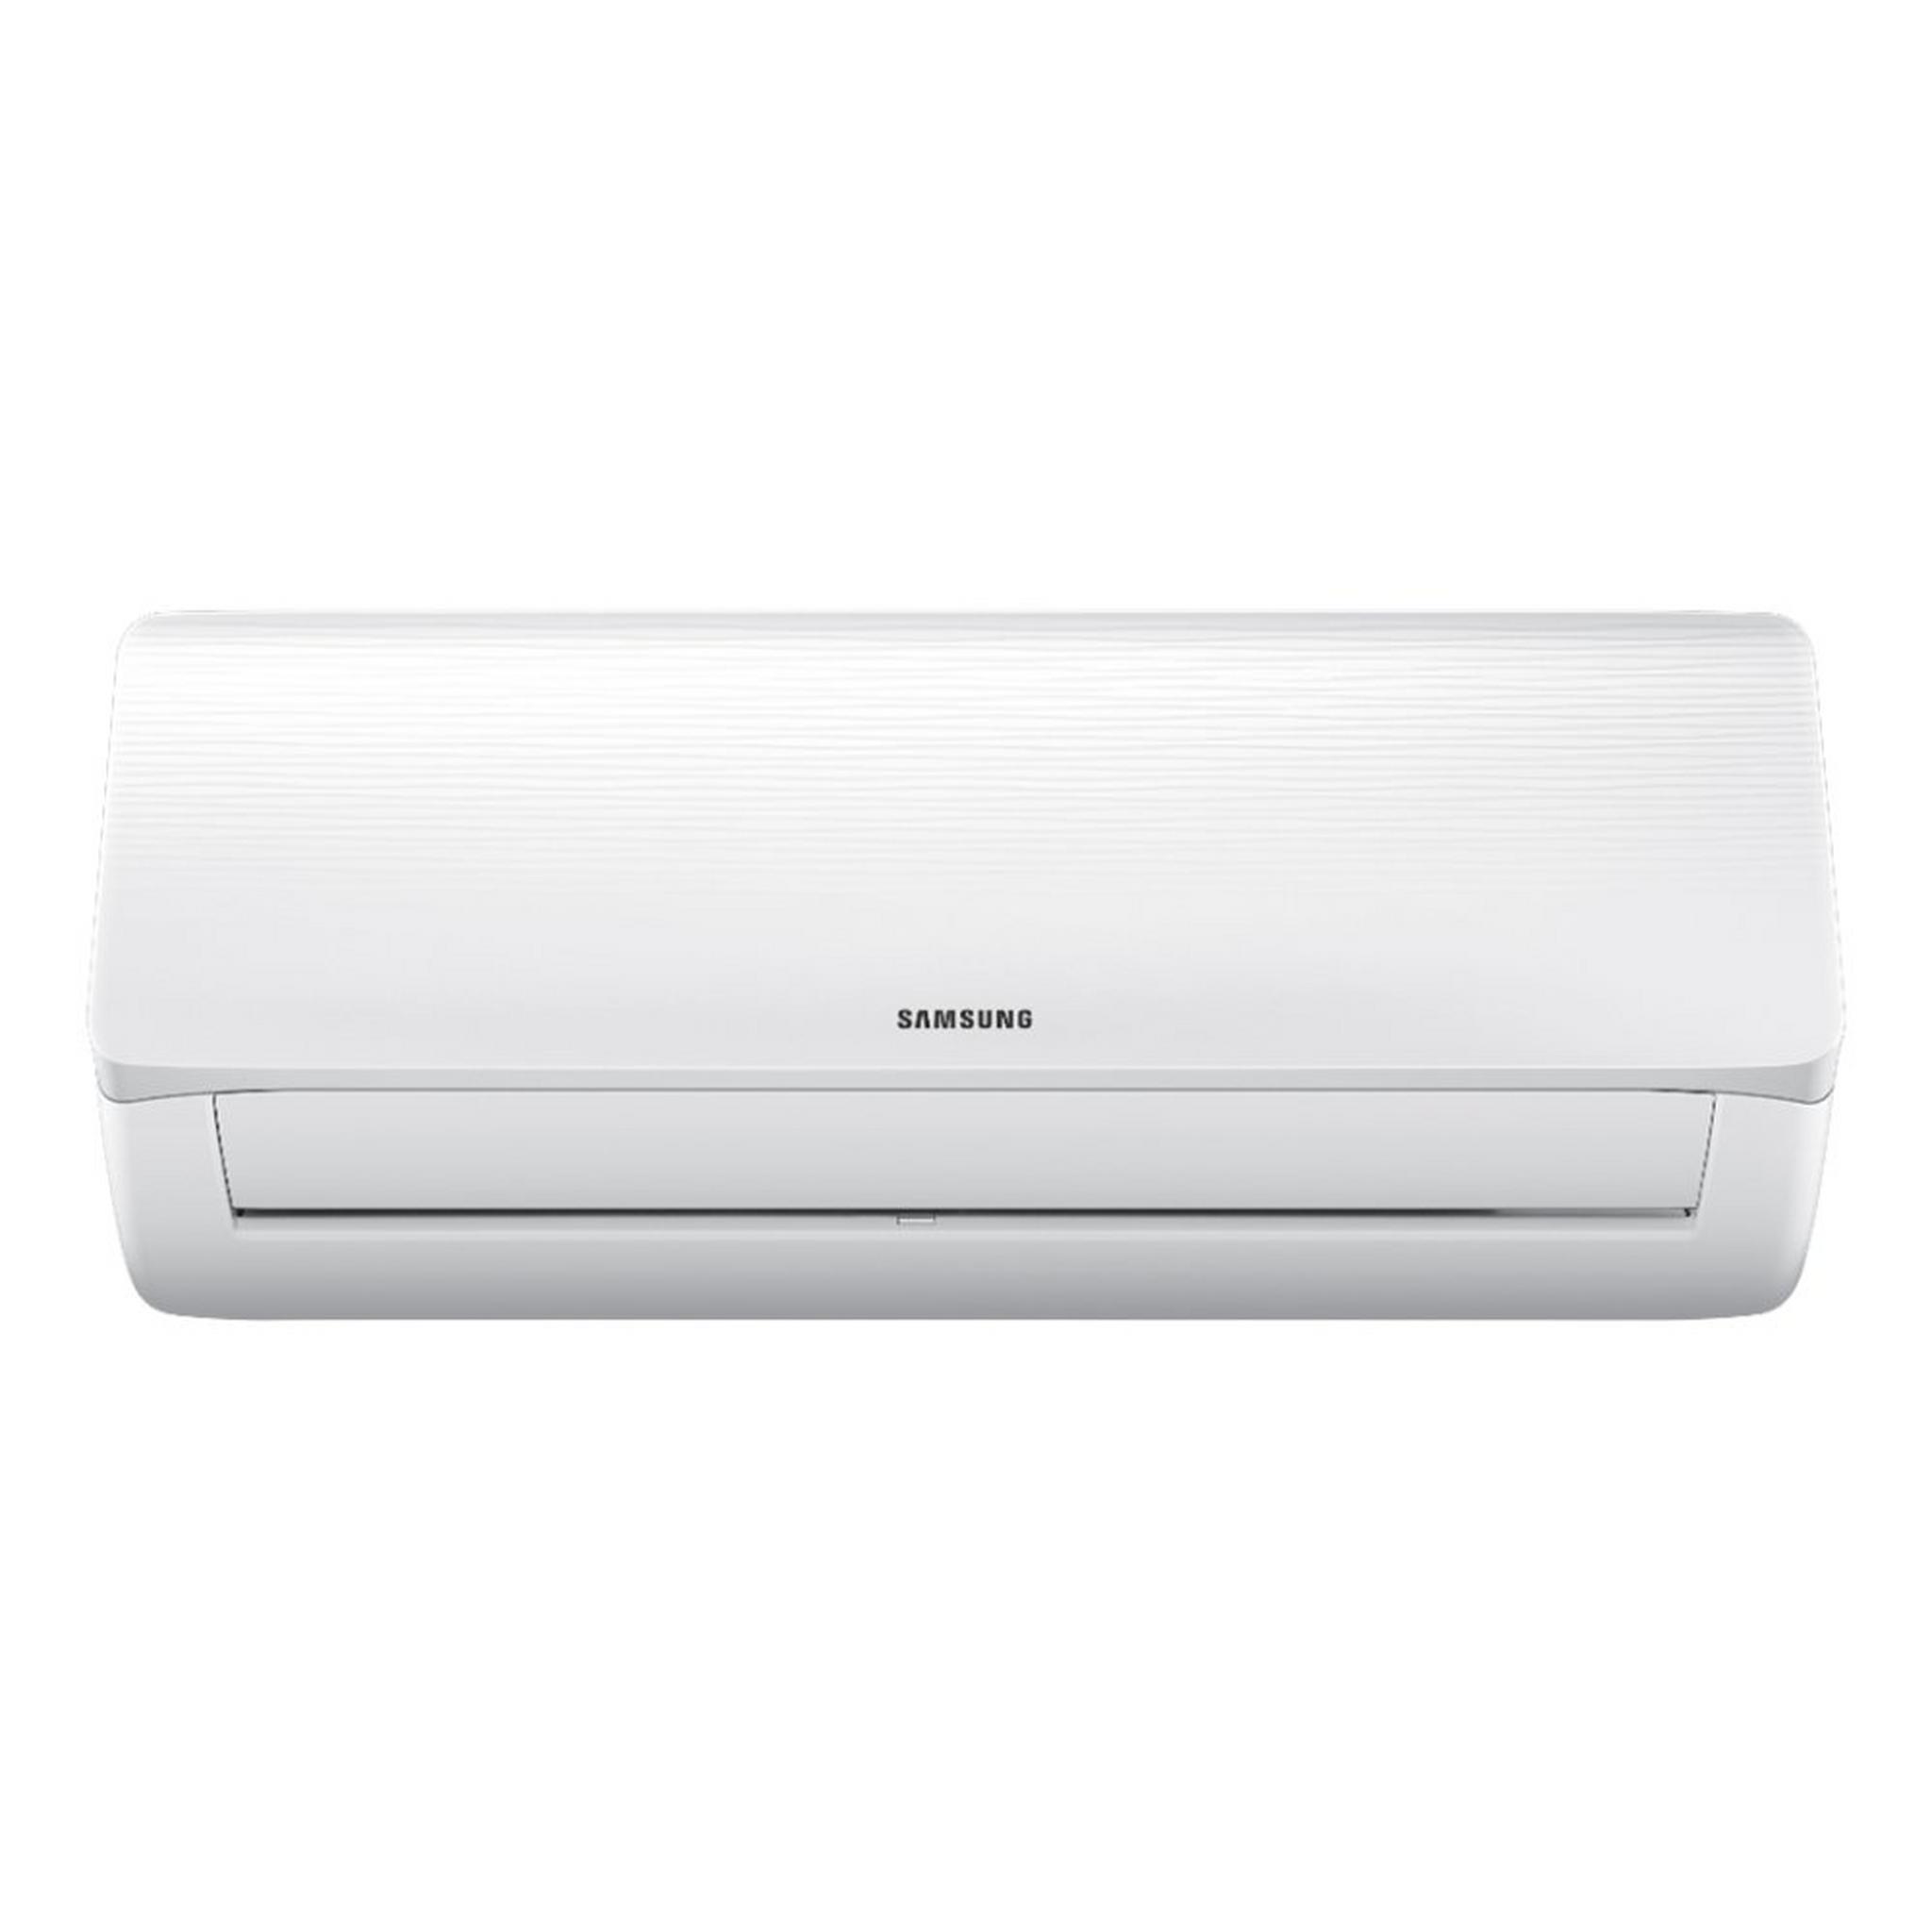 Samsung Split AC, 14505 BTU, Cooling Only, AR18BRHQLWK - White